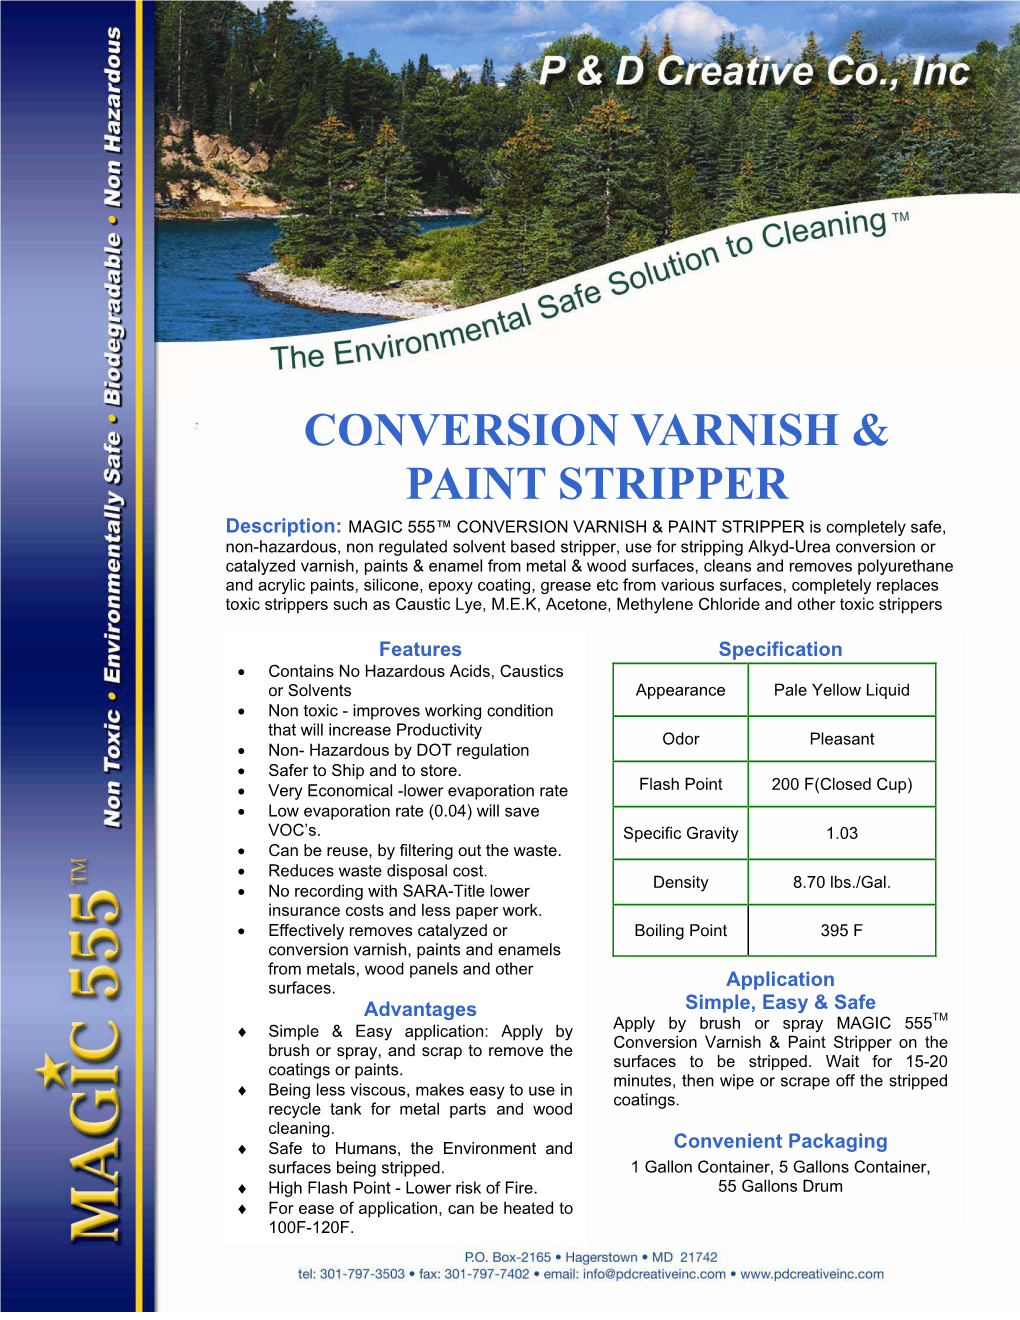 Conversion Varnish & Paint Stripper